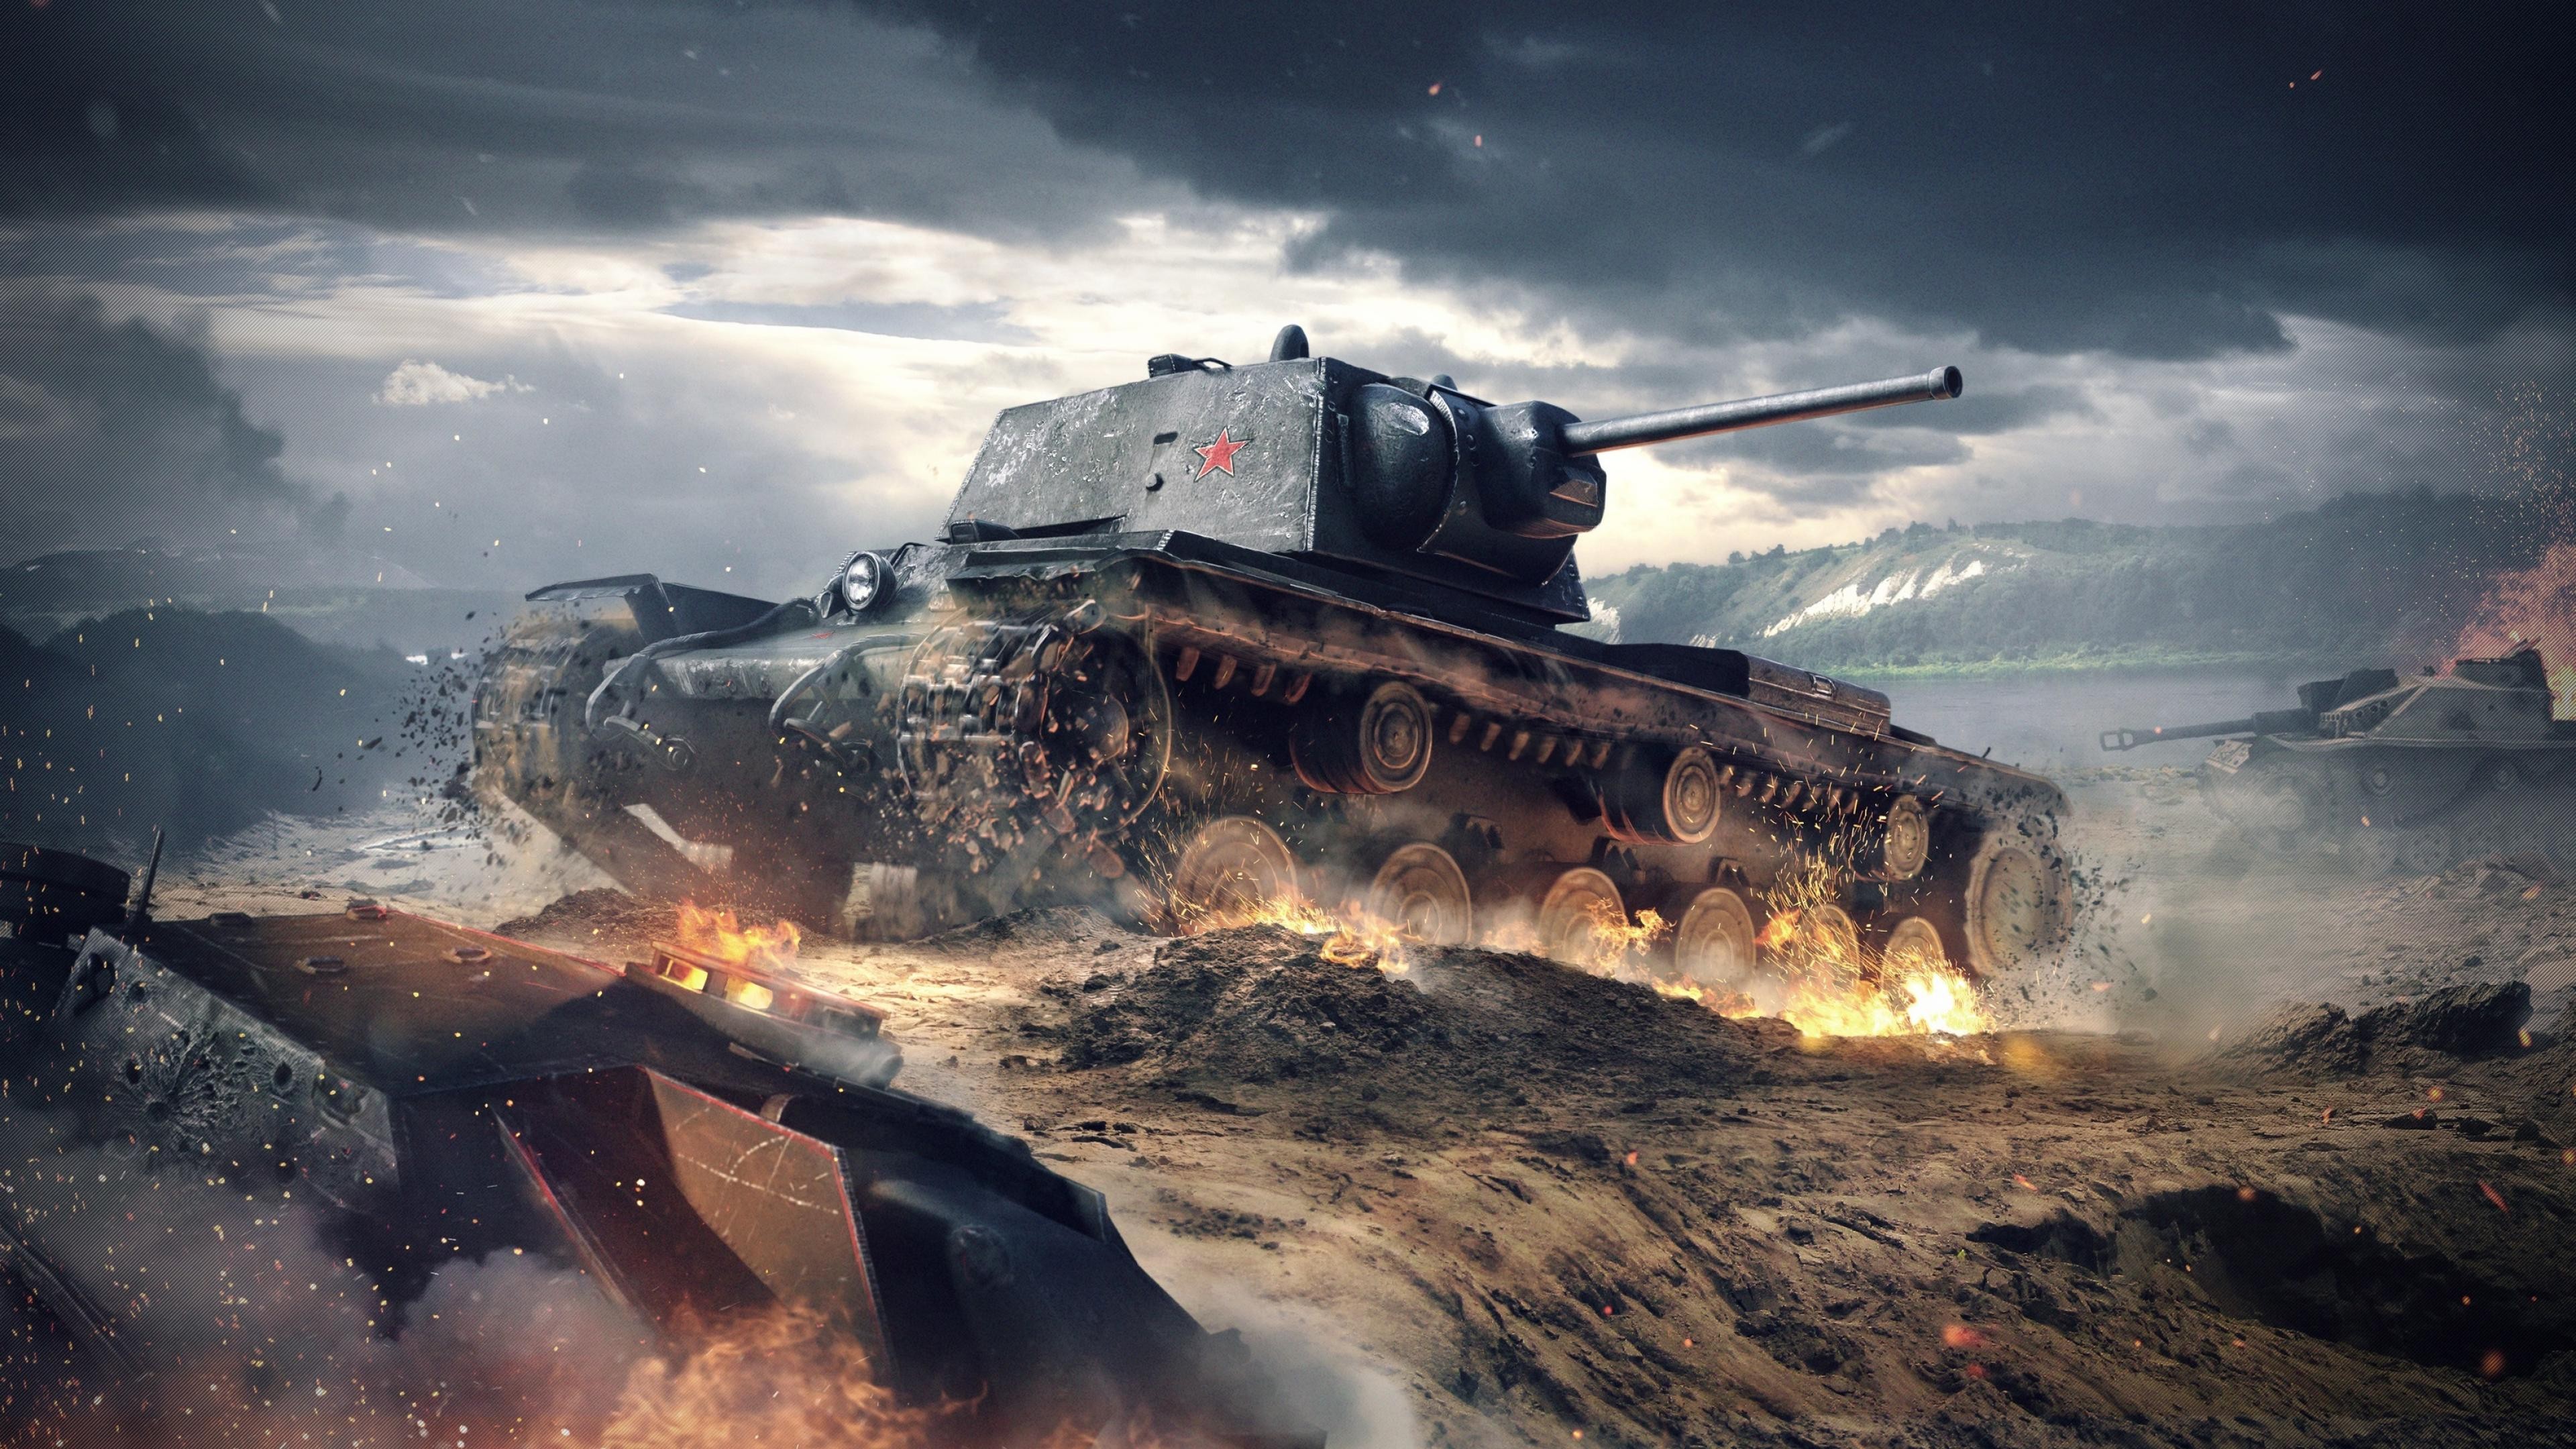 Wallpaper World of Tanks Blitz, game, tactic, mmo, tank, KV- battlefield, sparks, clouds, sky, battle, fire, screenshot, 4k, 5k, PC, Military